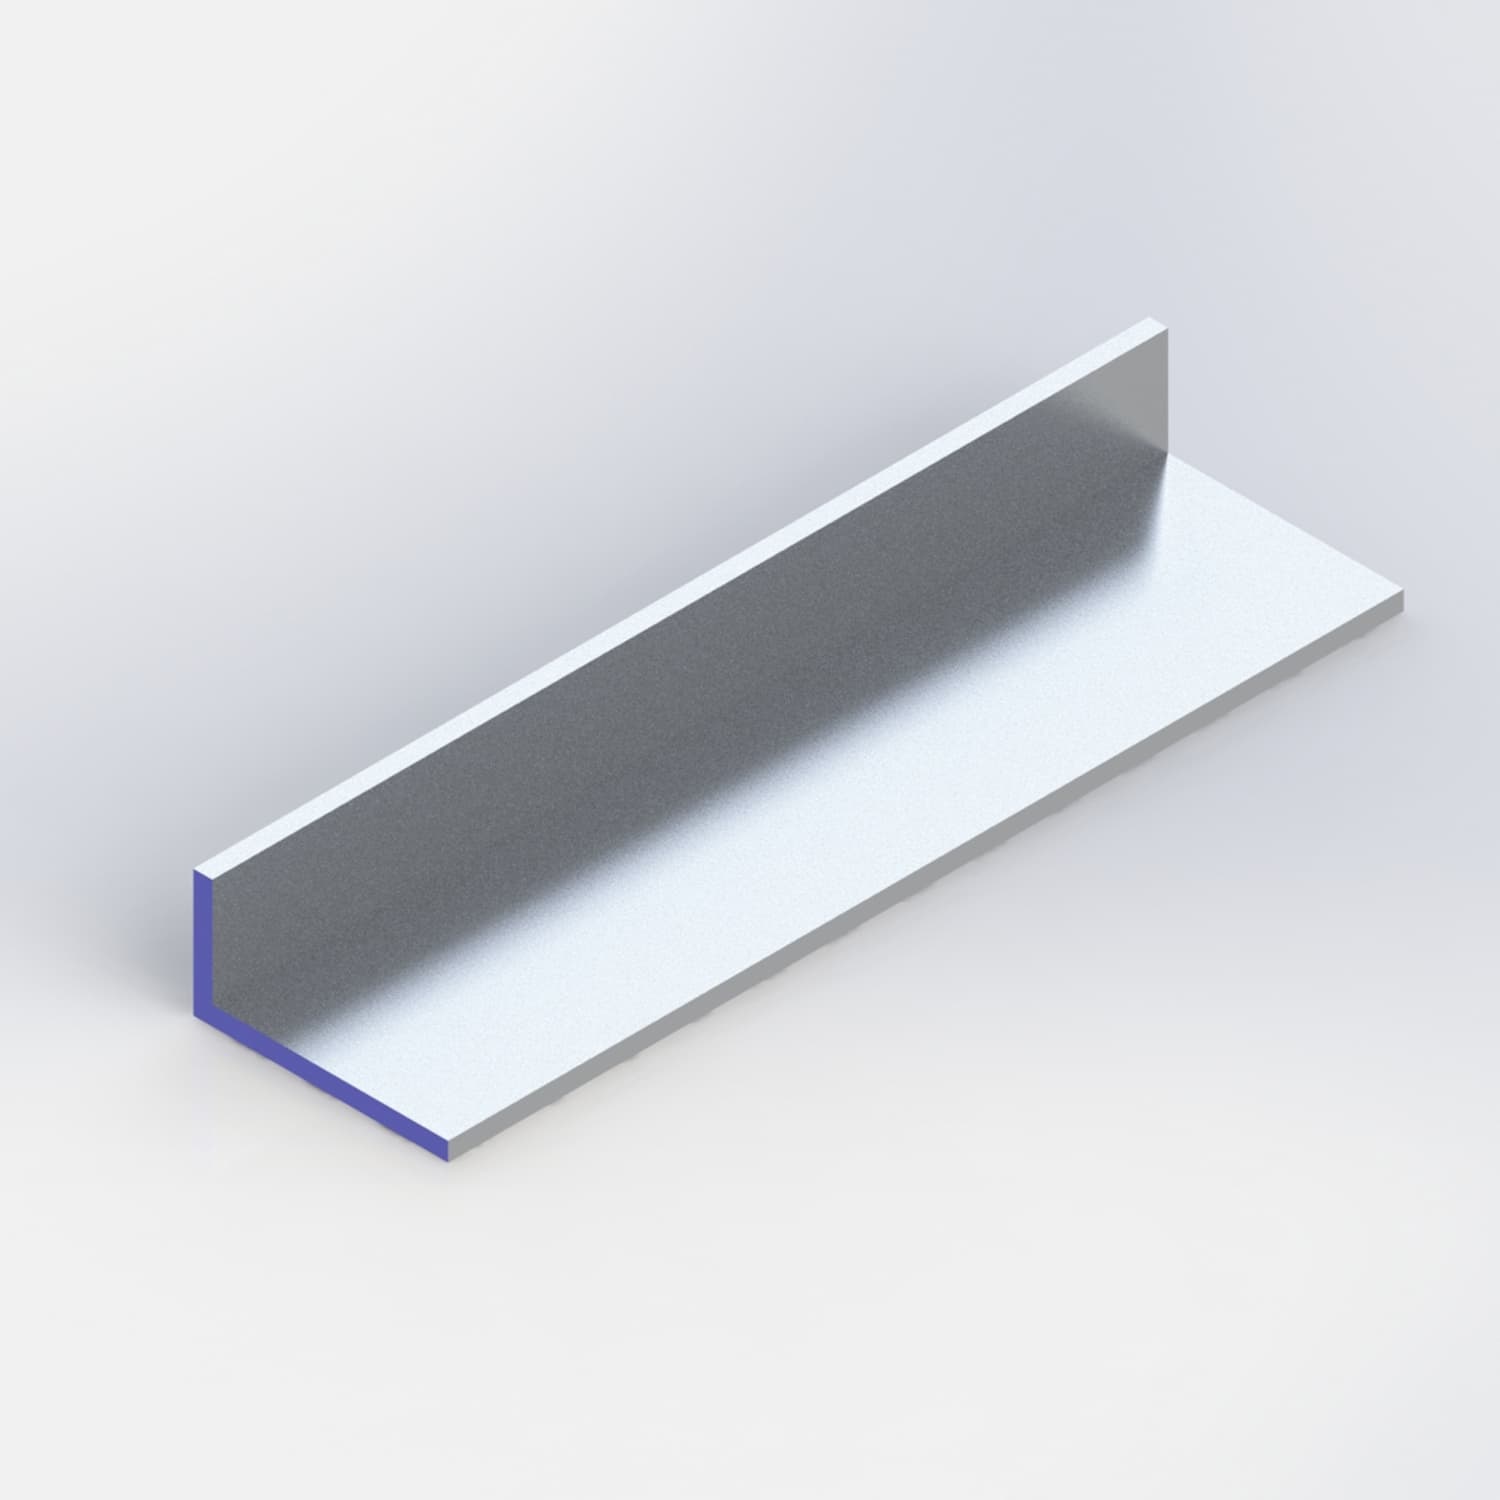 Serie van paus statisch L profiel aluminium 50x20x2 mm - Brut / Onbehandeld ALU - tot 600 cm! |  ALUMINIUMvakman